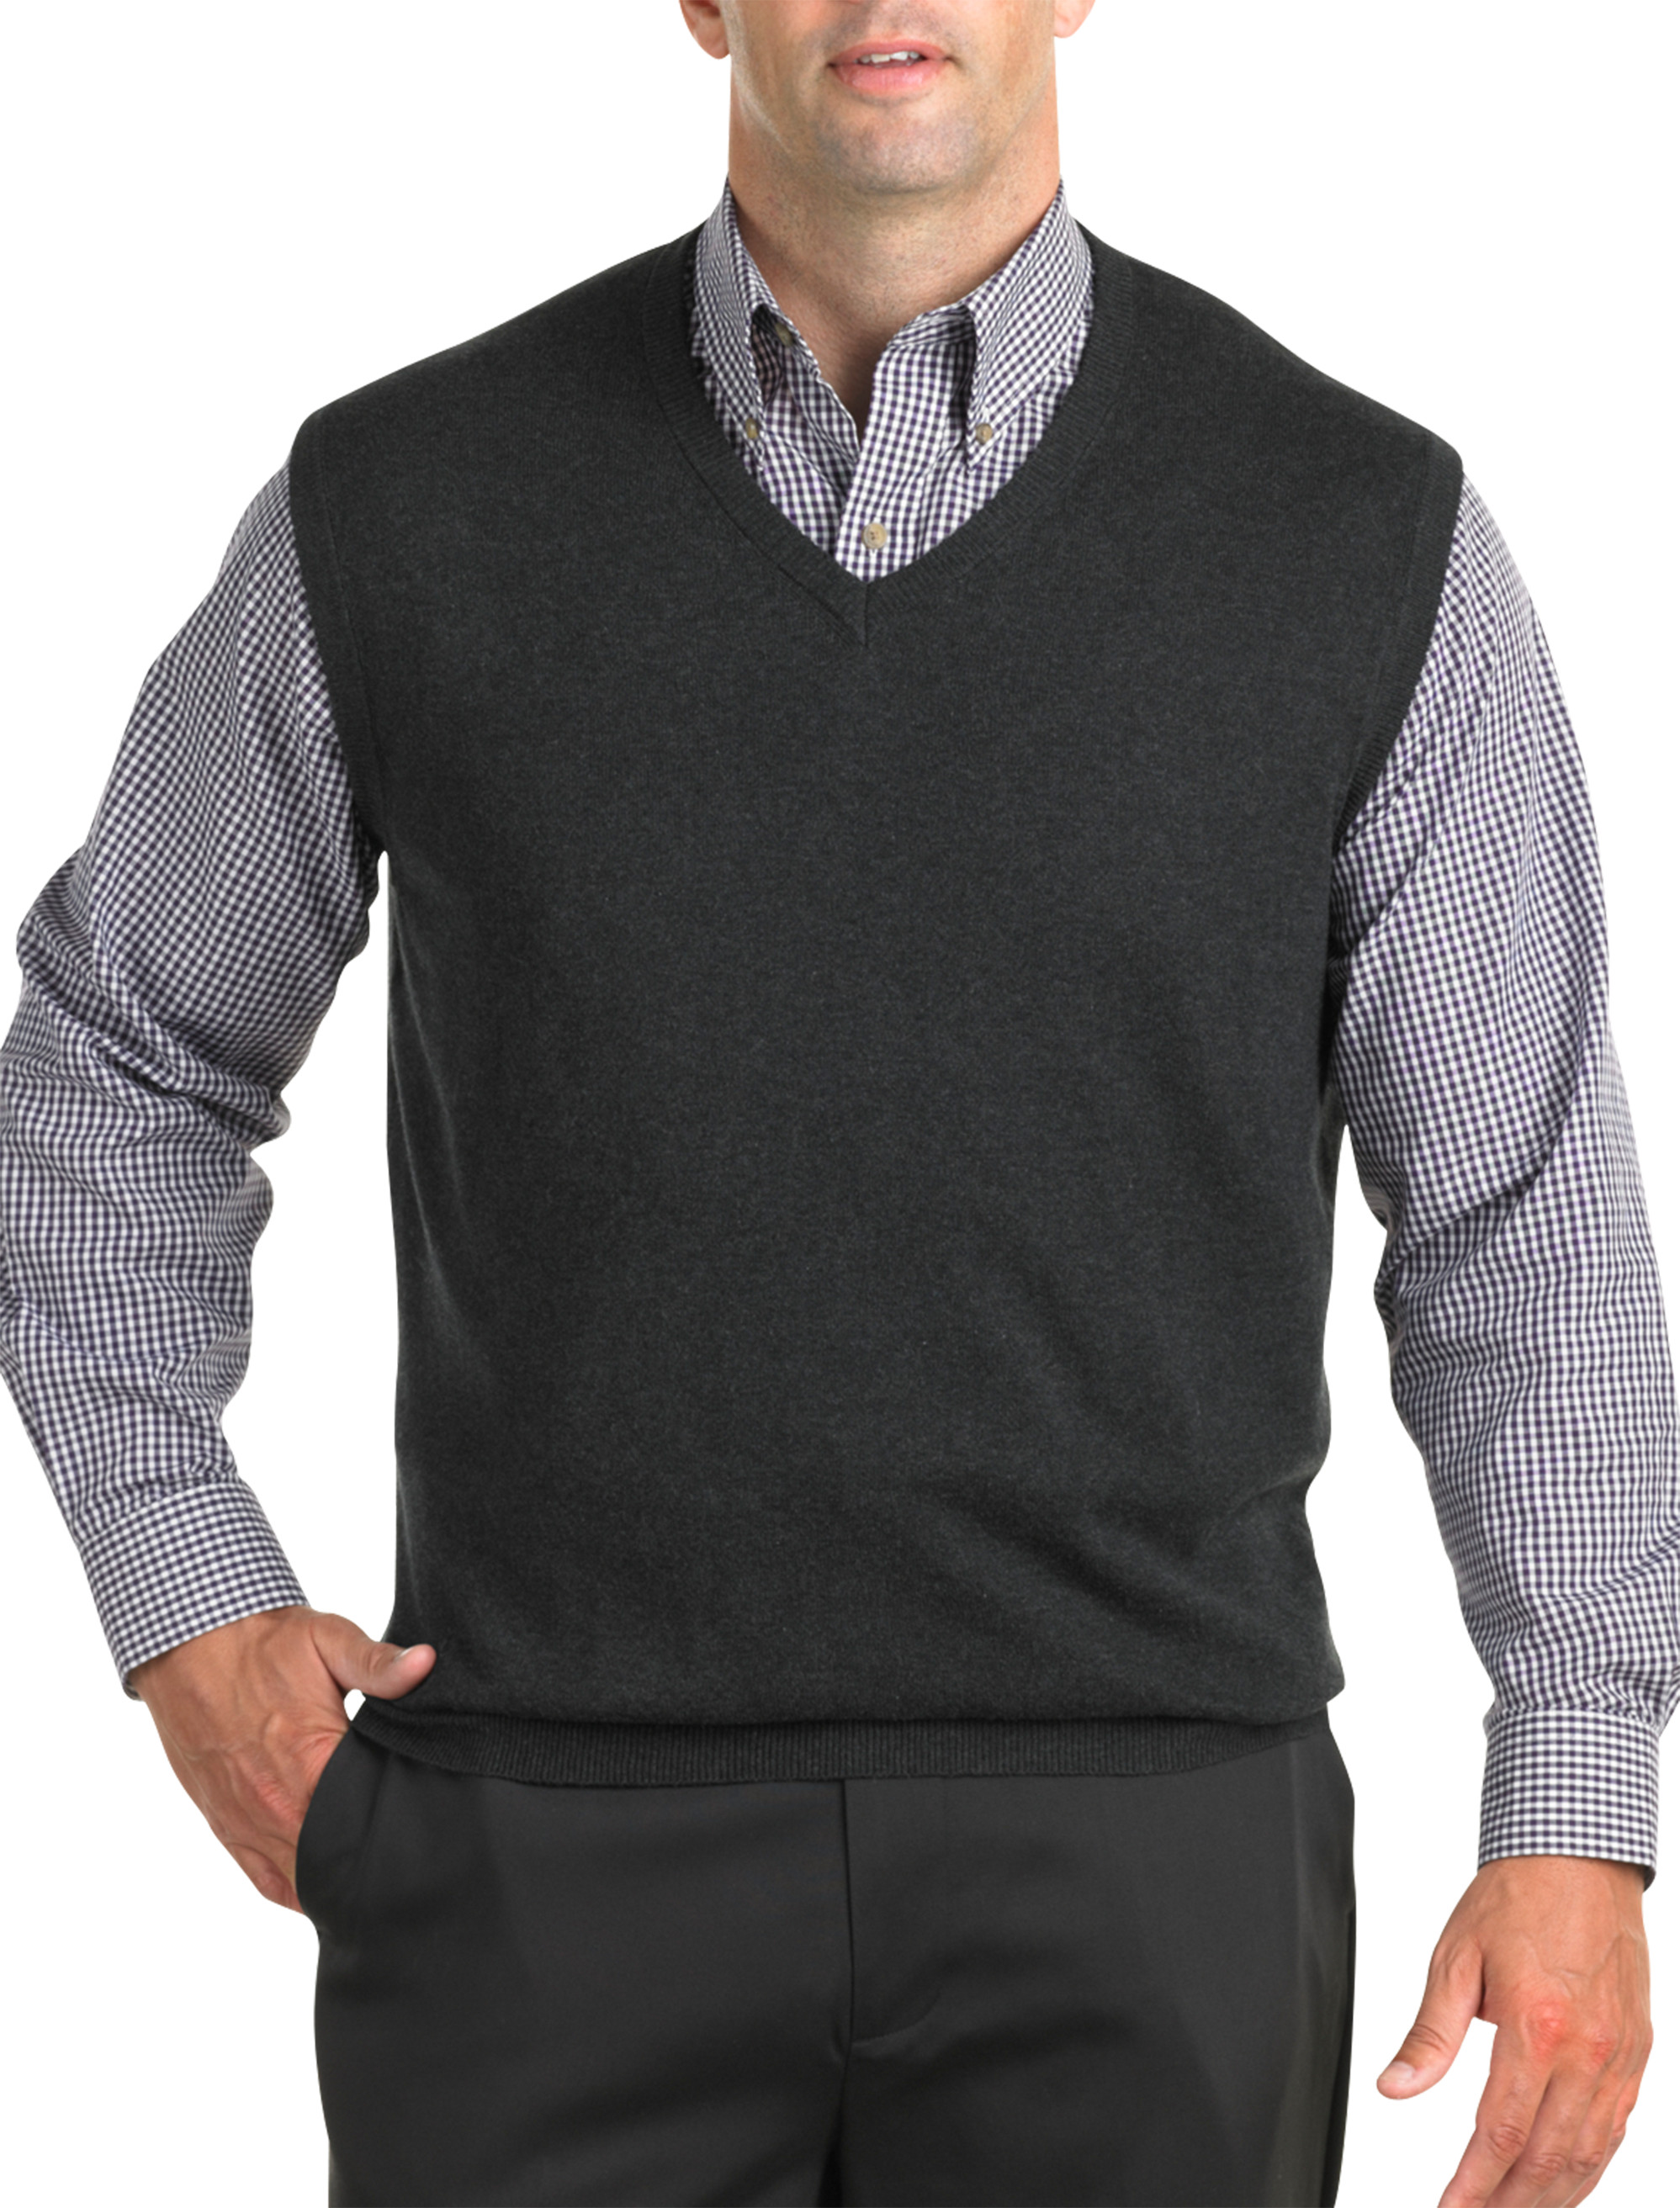 Harbor Bay V-Neck Sweater Vest Casual Male XL Big & Tall | eBay